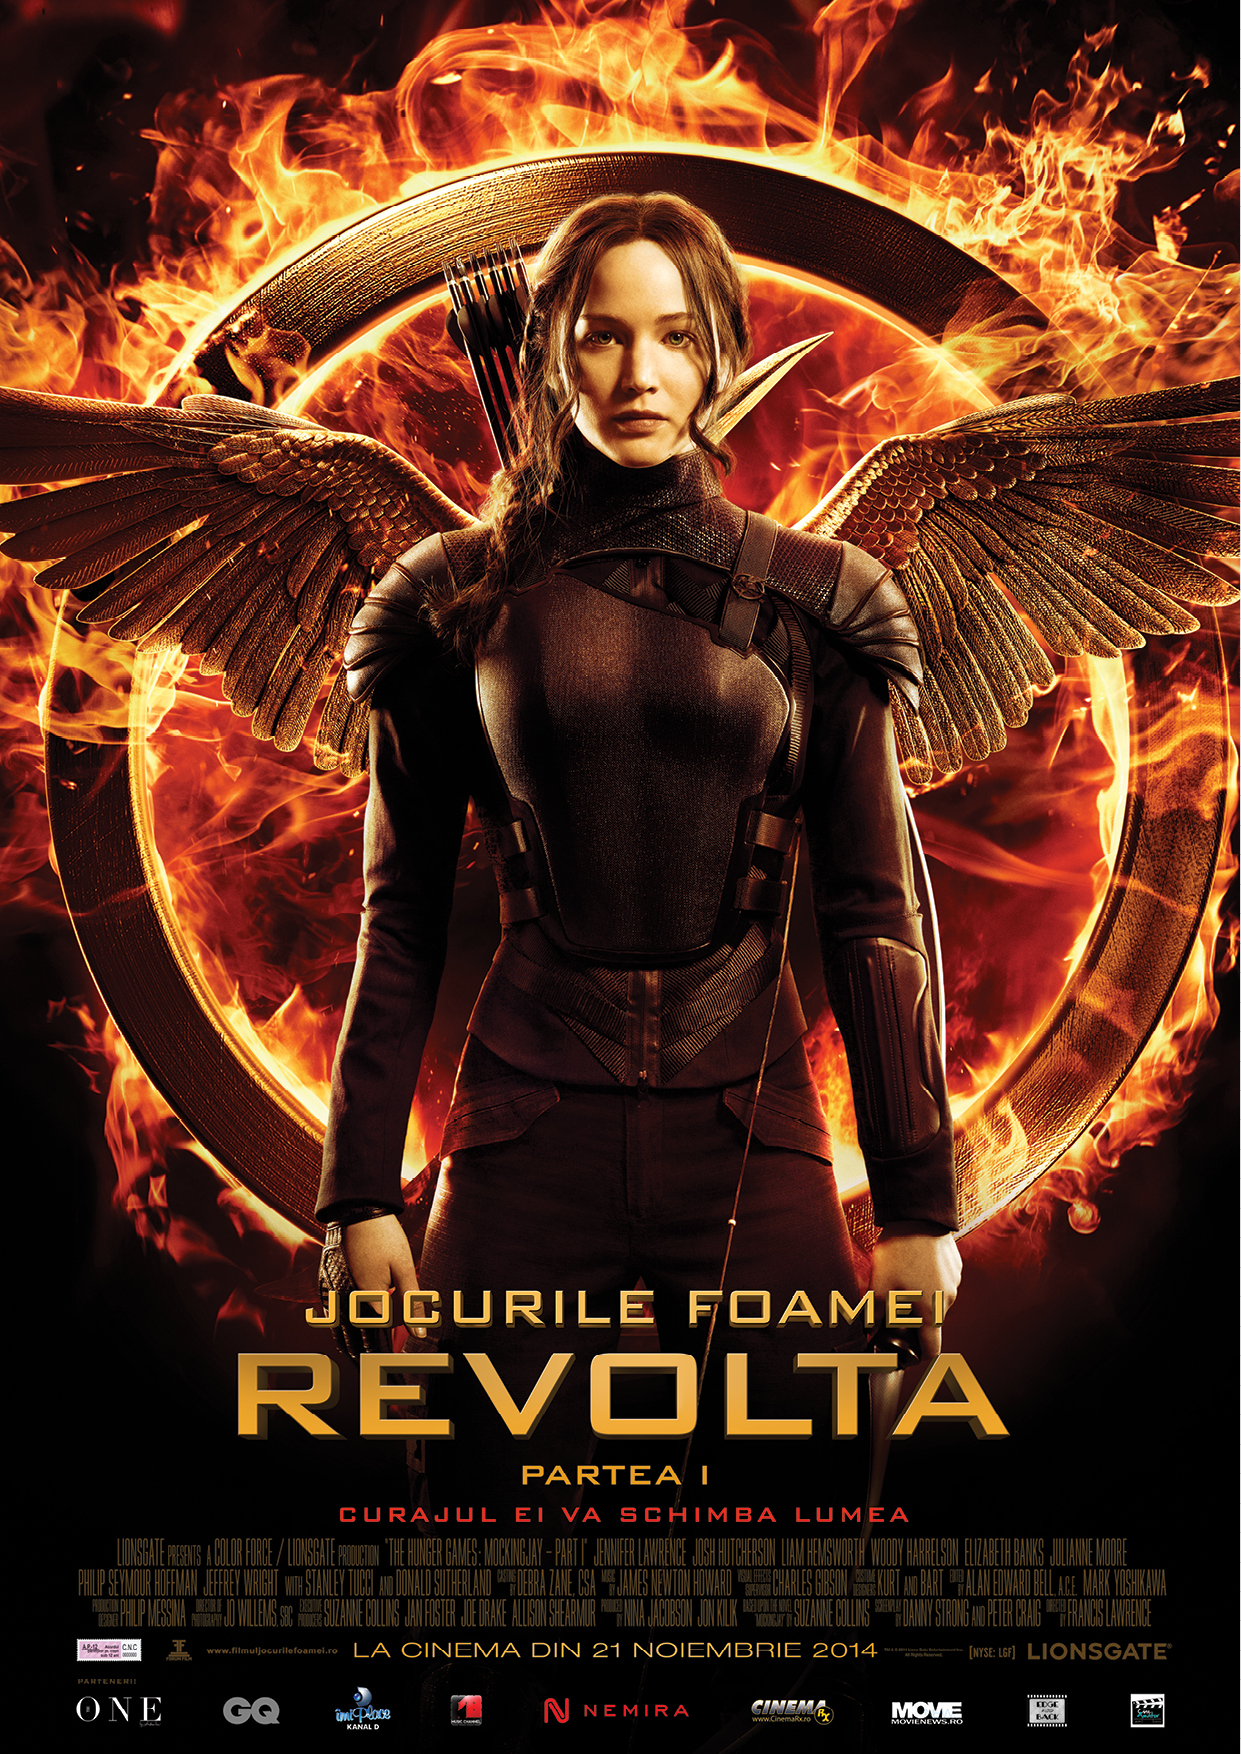 The Hunger Games: Mockingjay/ Jocurile foamei: Revolta (DVD) actiune